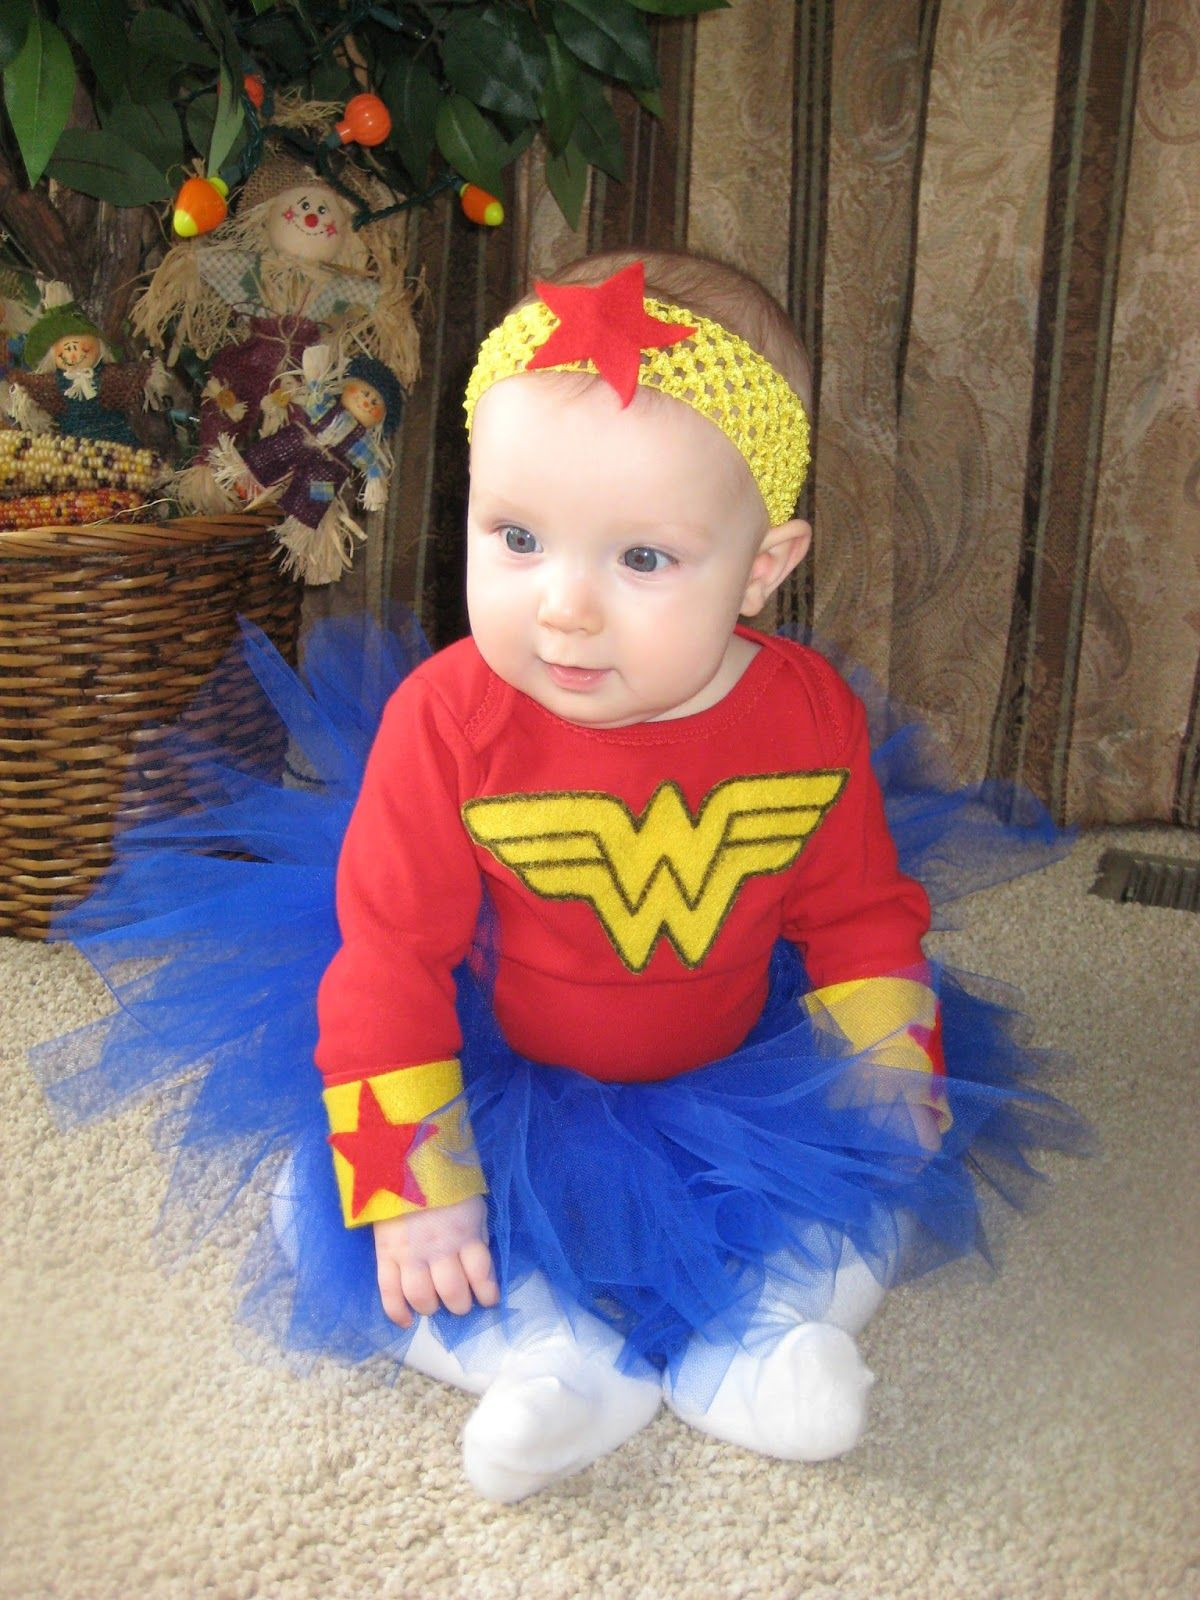 DIY Baby Costume Ideas
 DIY Halloween Costume Ideas